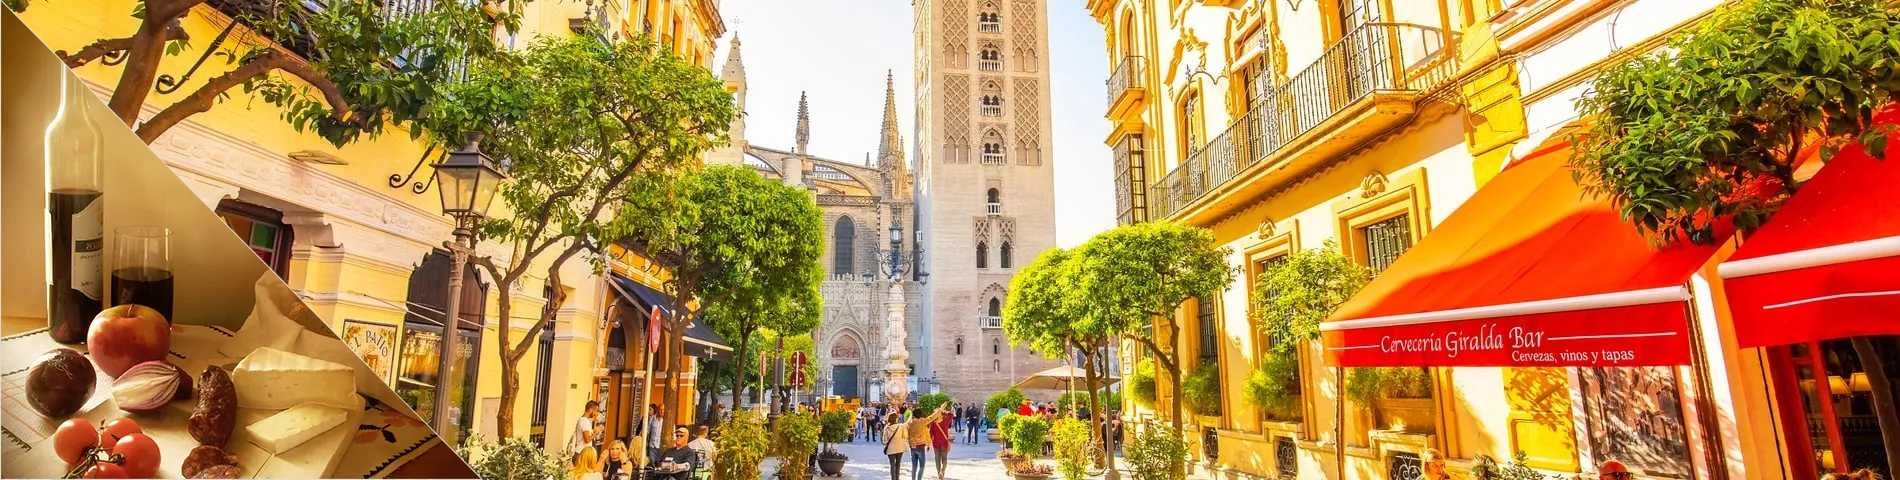 Sevilla - Španielčina a kultúra